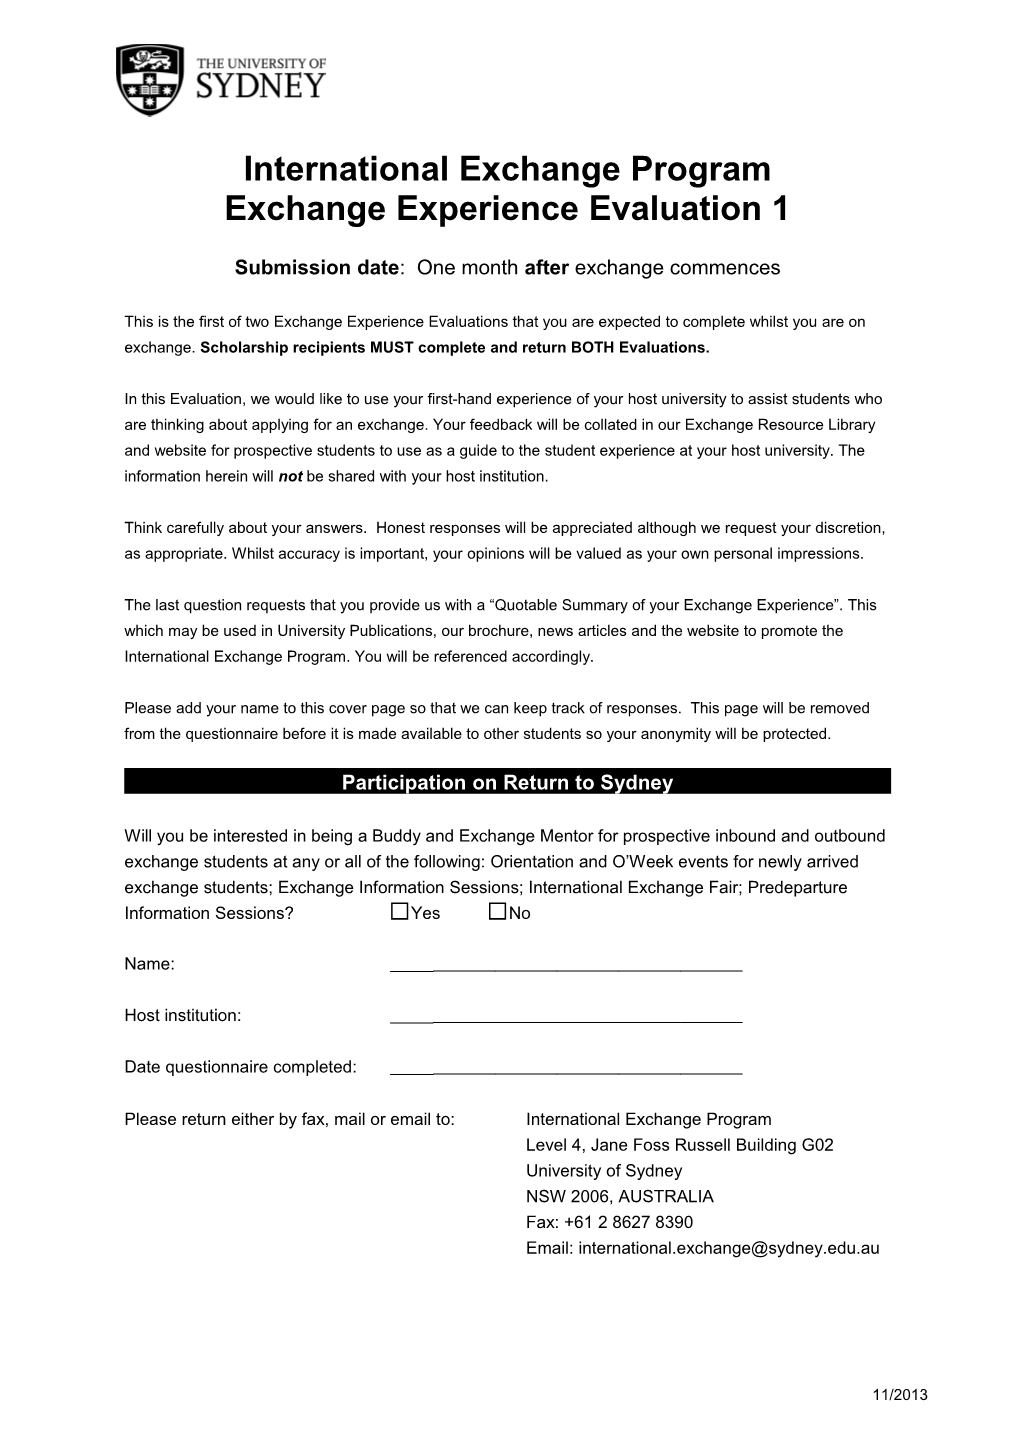 University of Sydney International Exchange Program Exchange Experience Evaluation 1